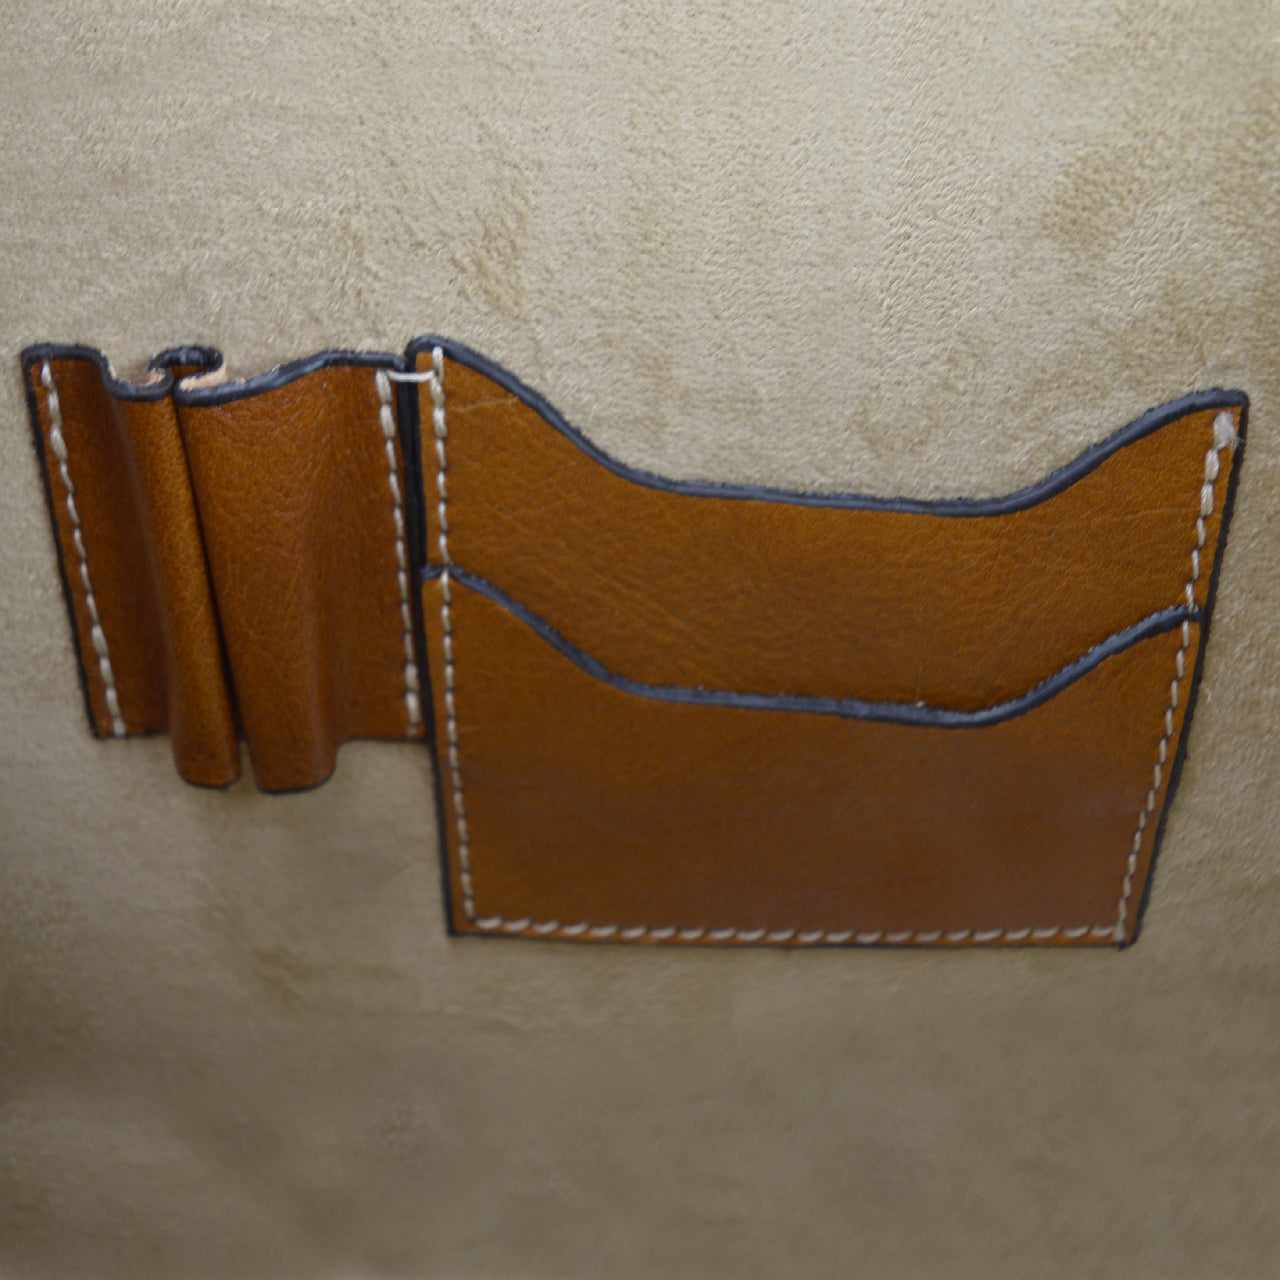 Pratesi Business Bag Secchieta in genuine Italian leather